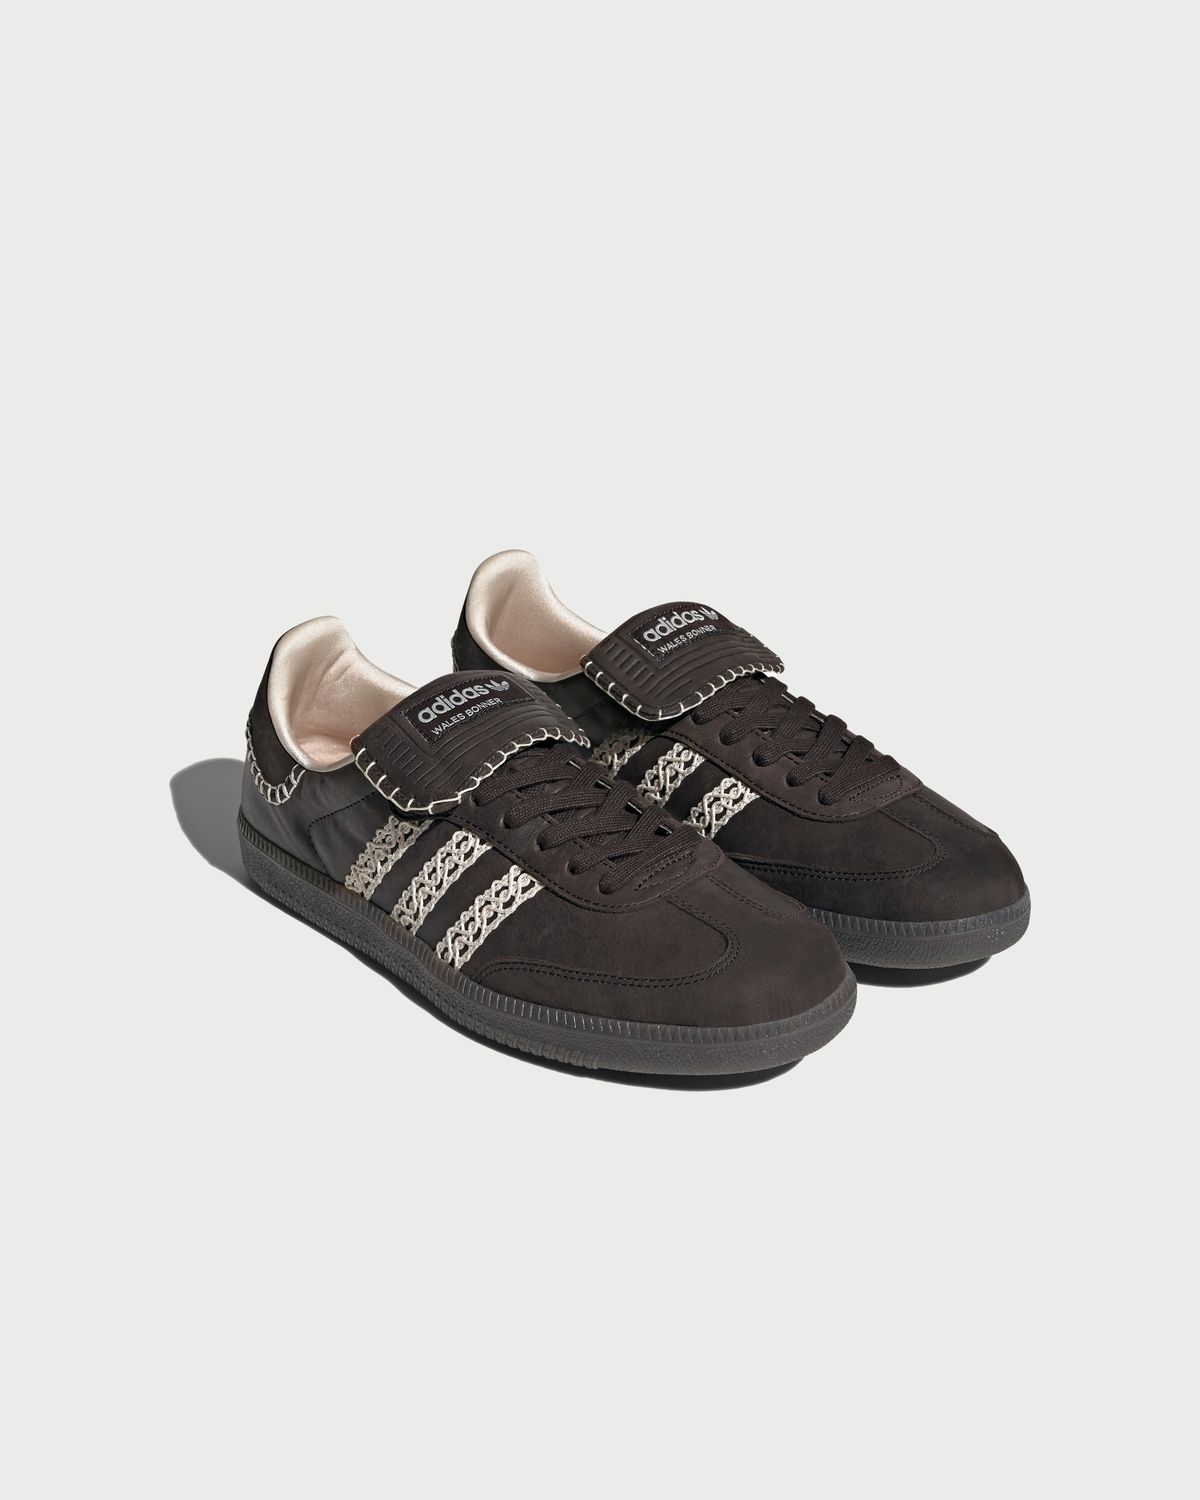 Adidas x Wales Bonner – Samba Black - Sneakers - Black - Image 2